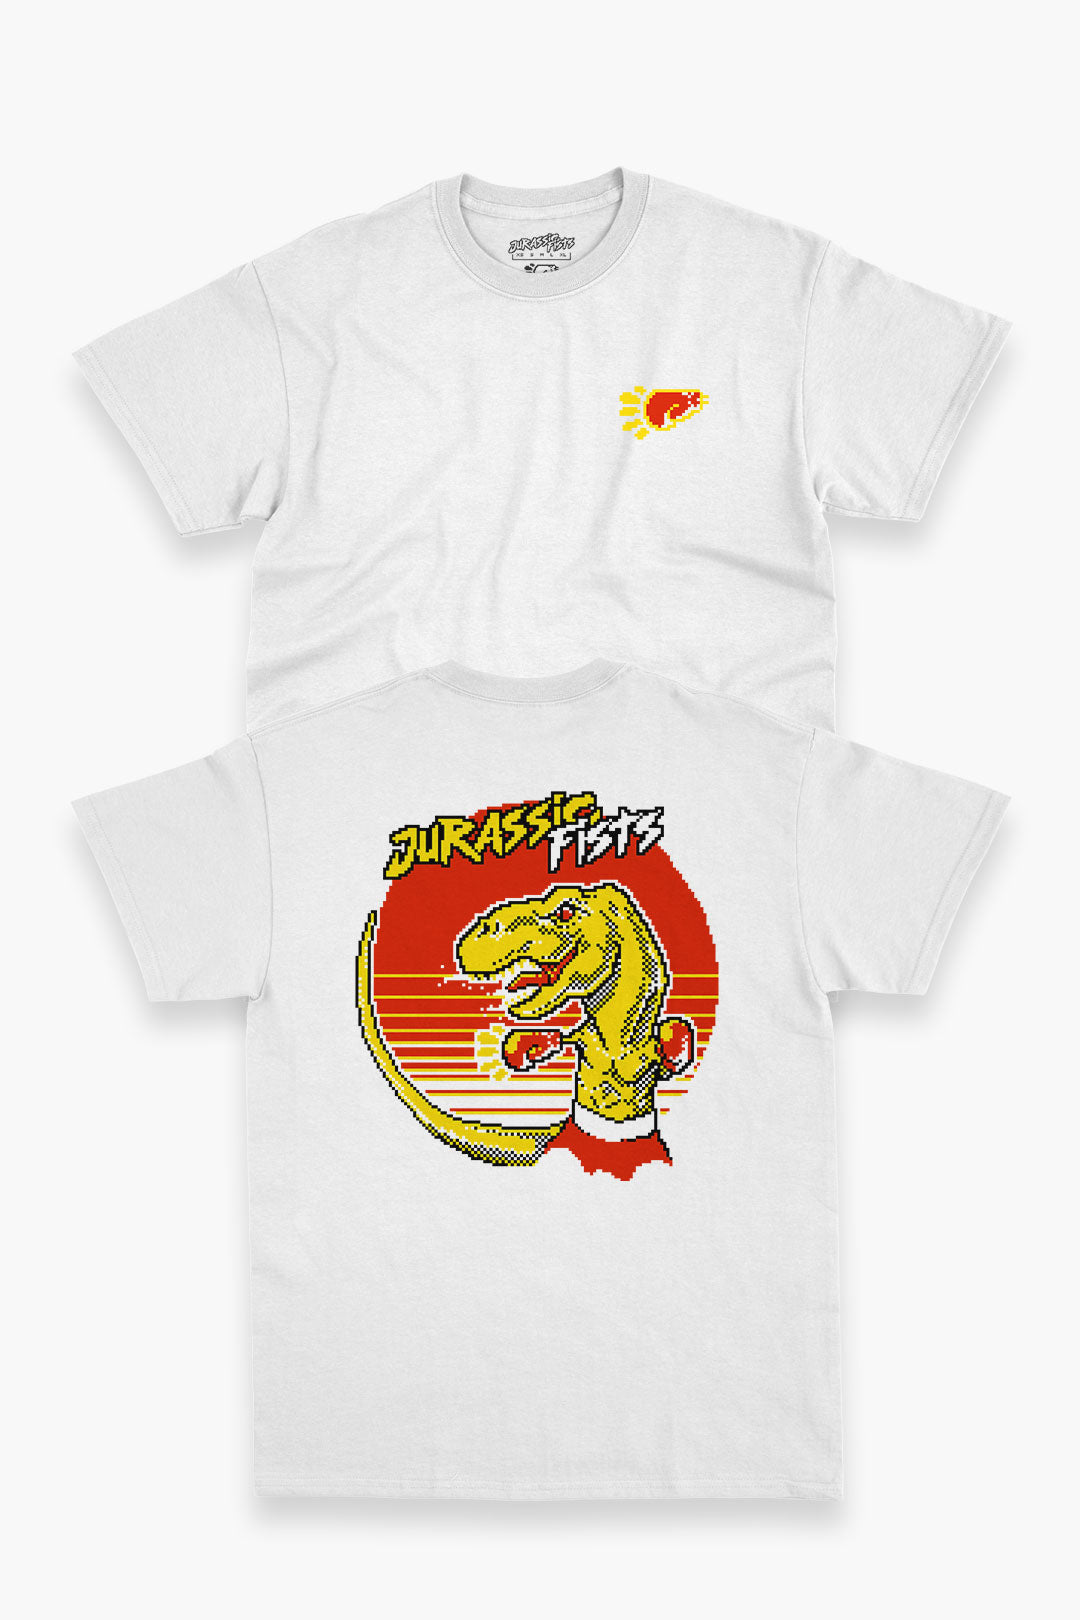 T-Shirt Jurassic